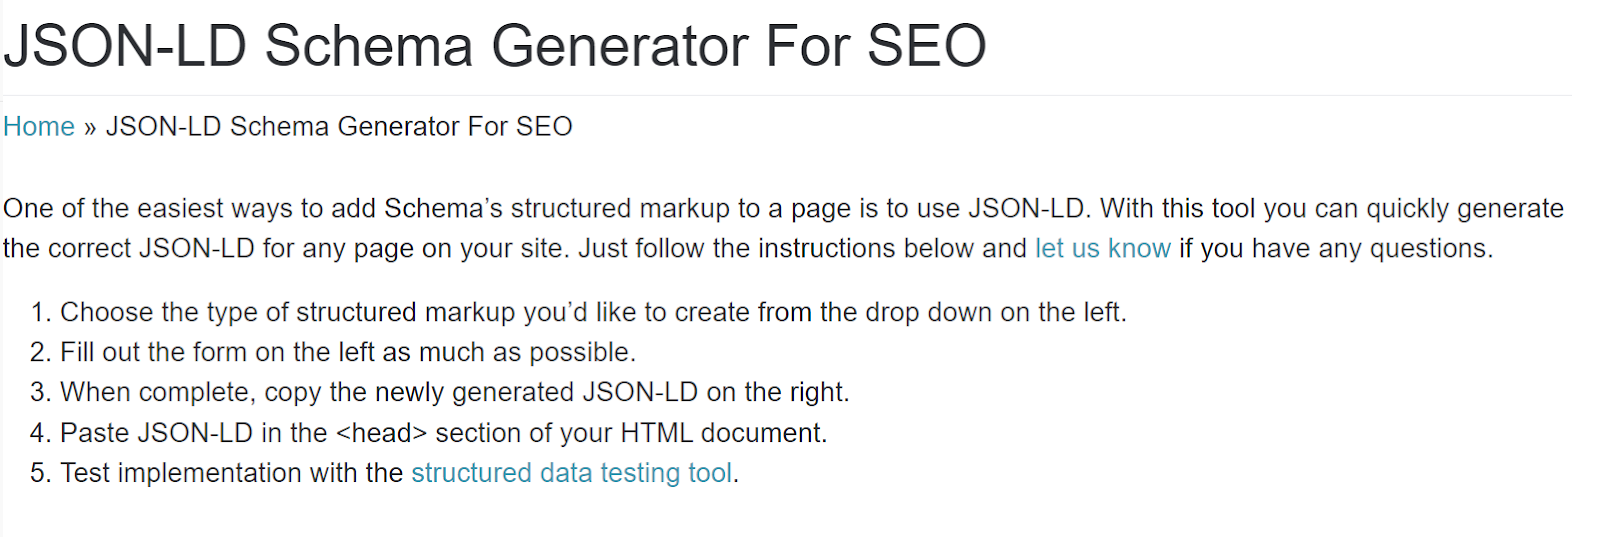 JSON-LD Schema Generator For SEO